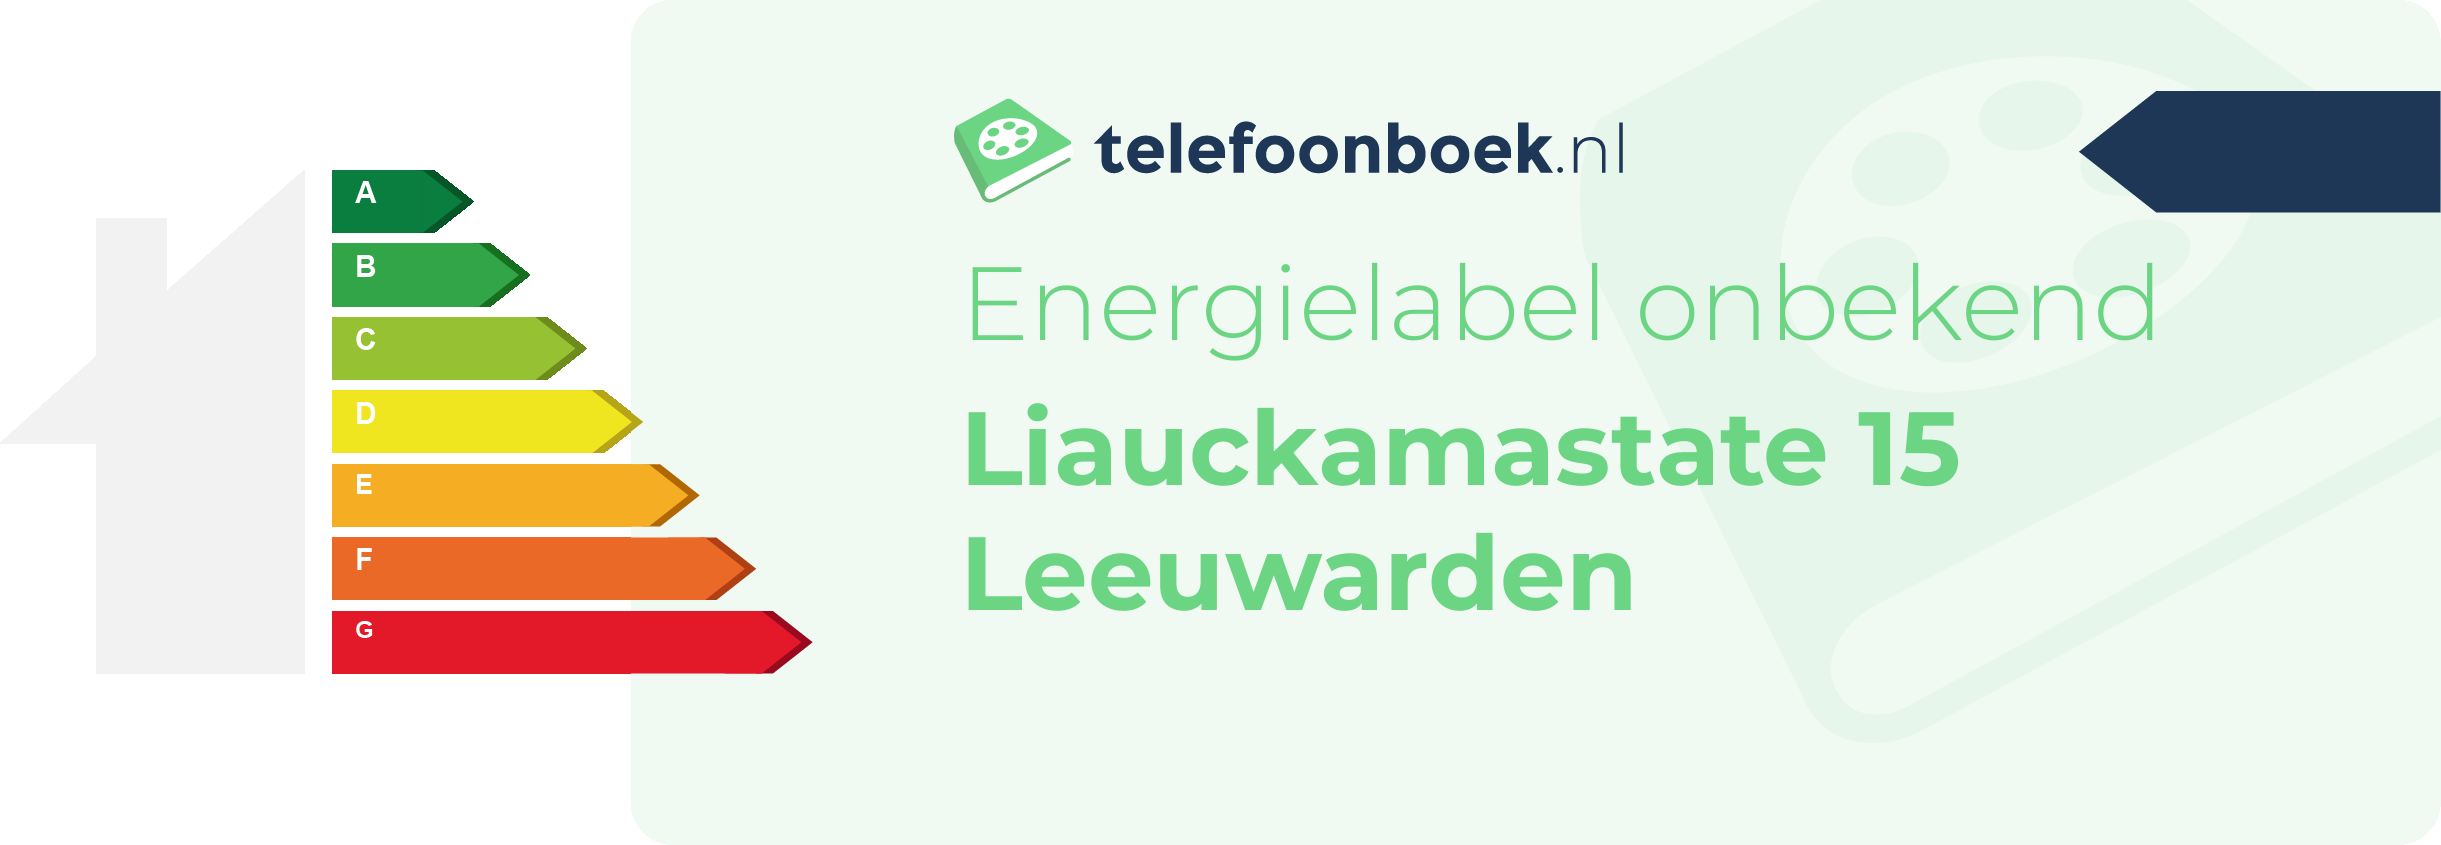 Energielabel Liauckamastate 15 Leeuwarden